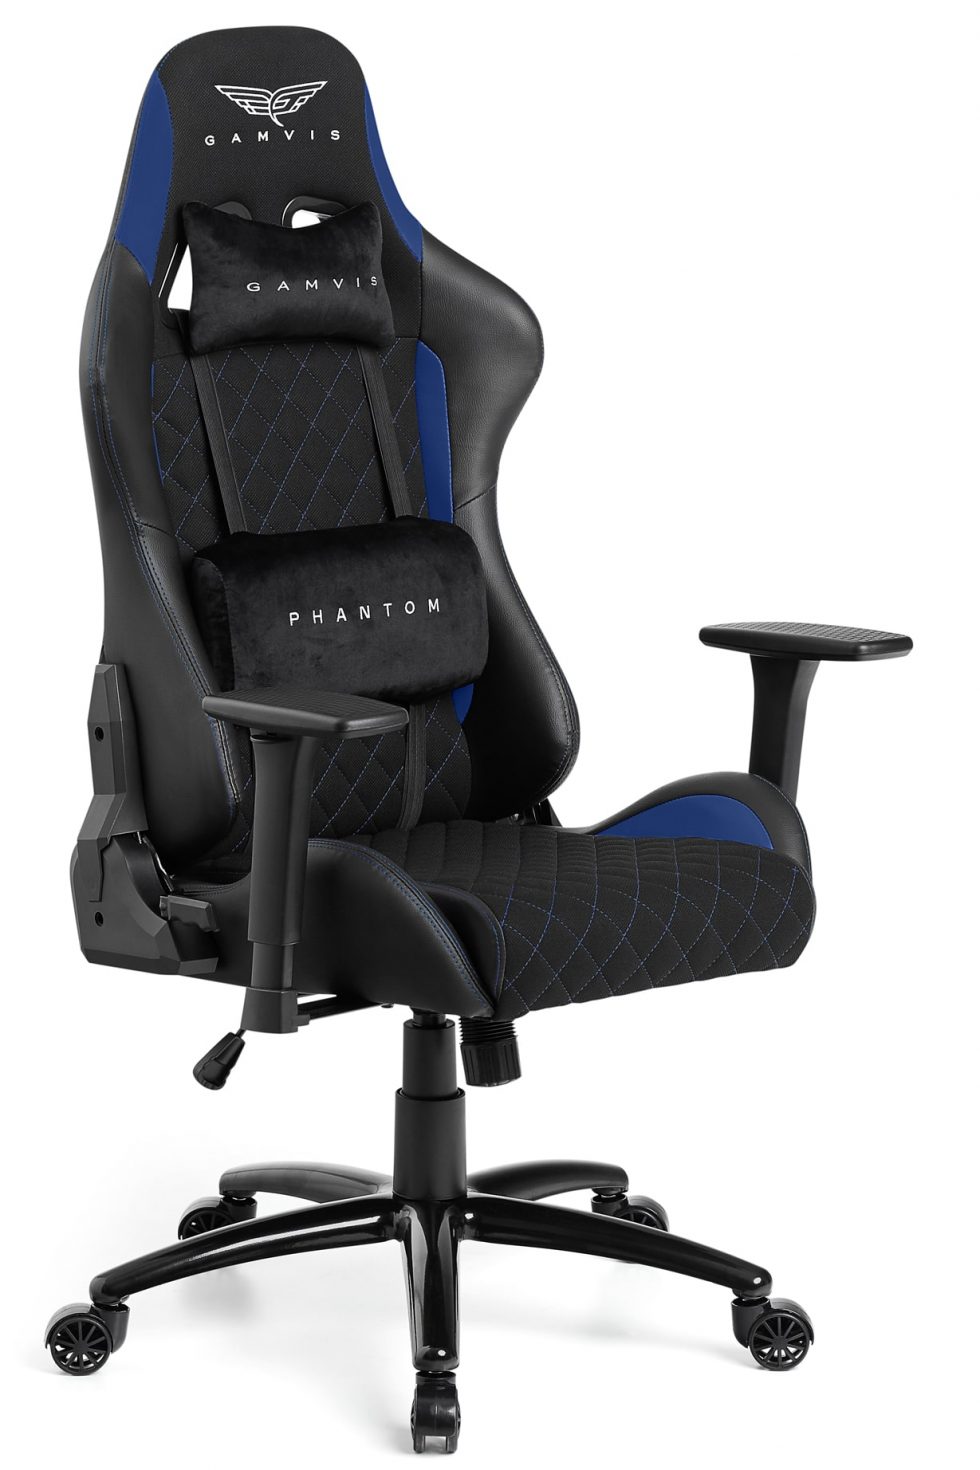 Gamvis PHANTOM Fabric Gaming Chair - Black/Blue